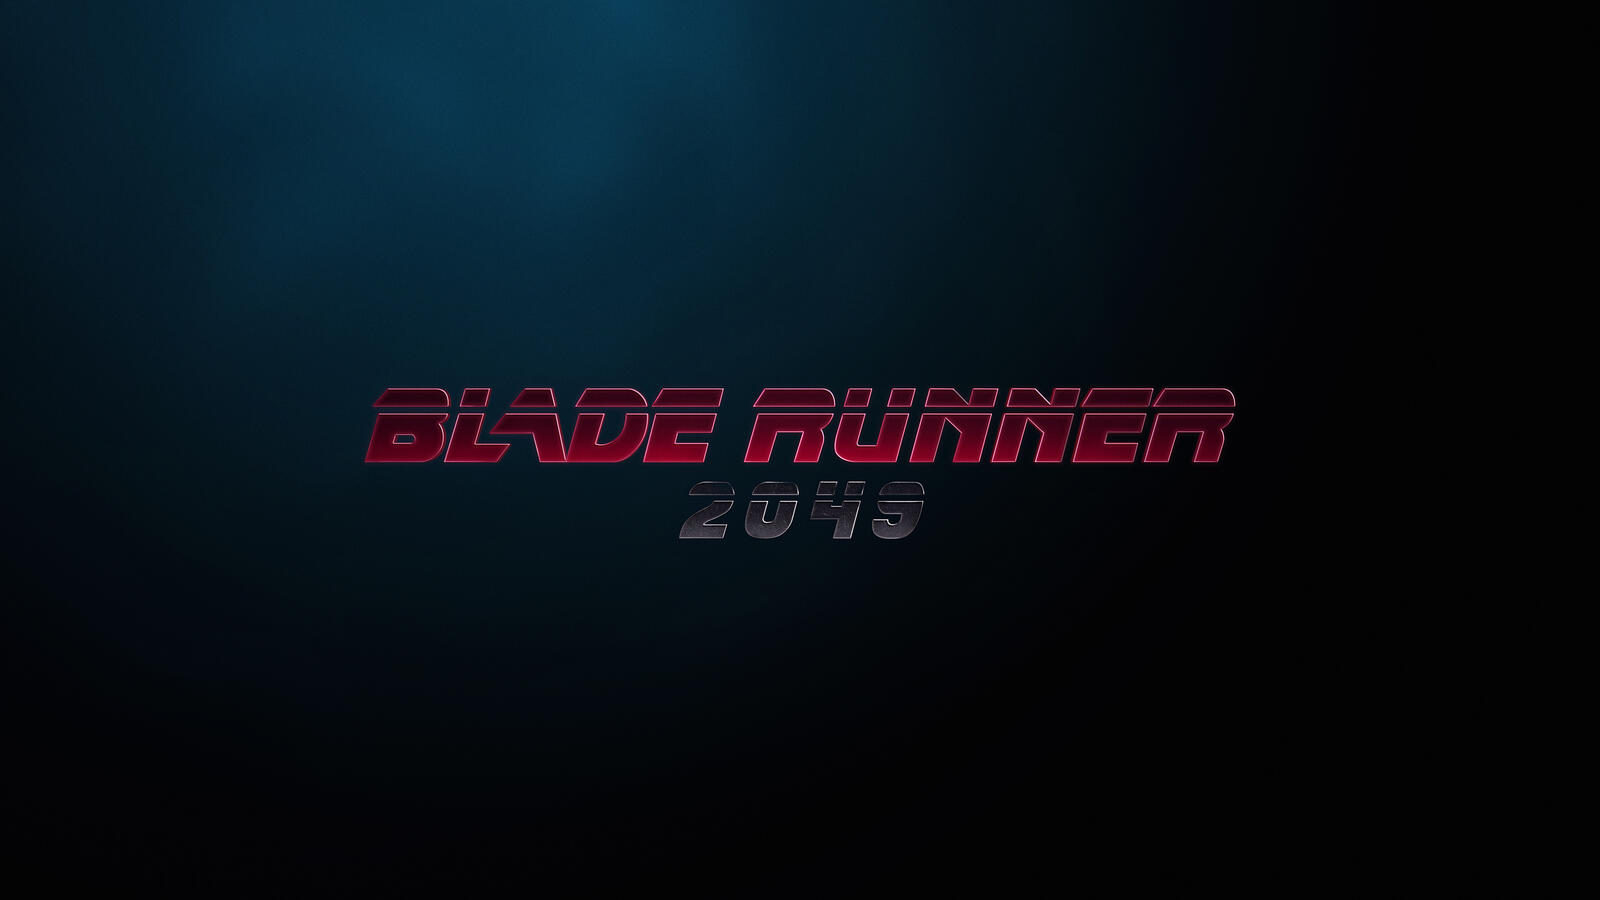 Wallpapers text inscription Blade Runner 2049 on the desktop